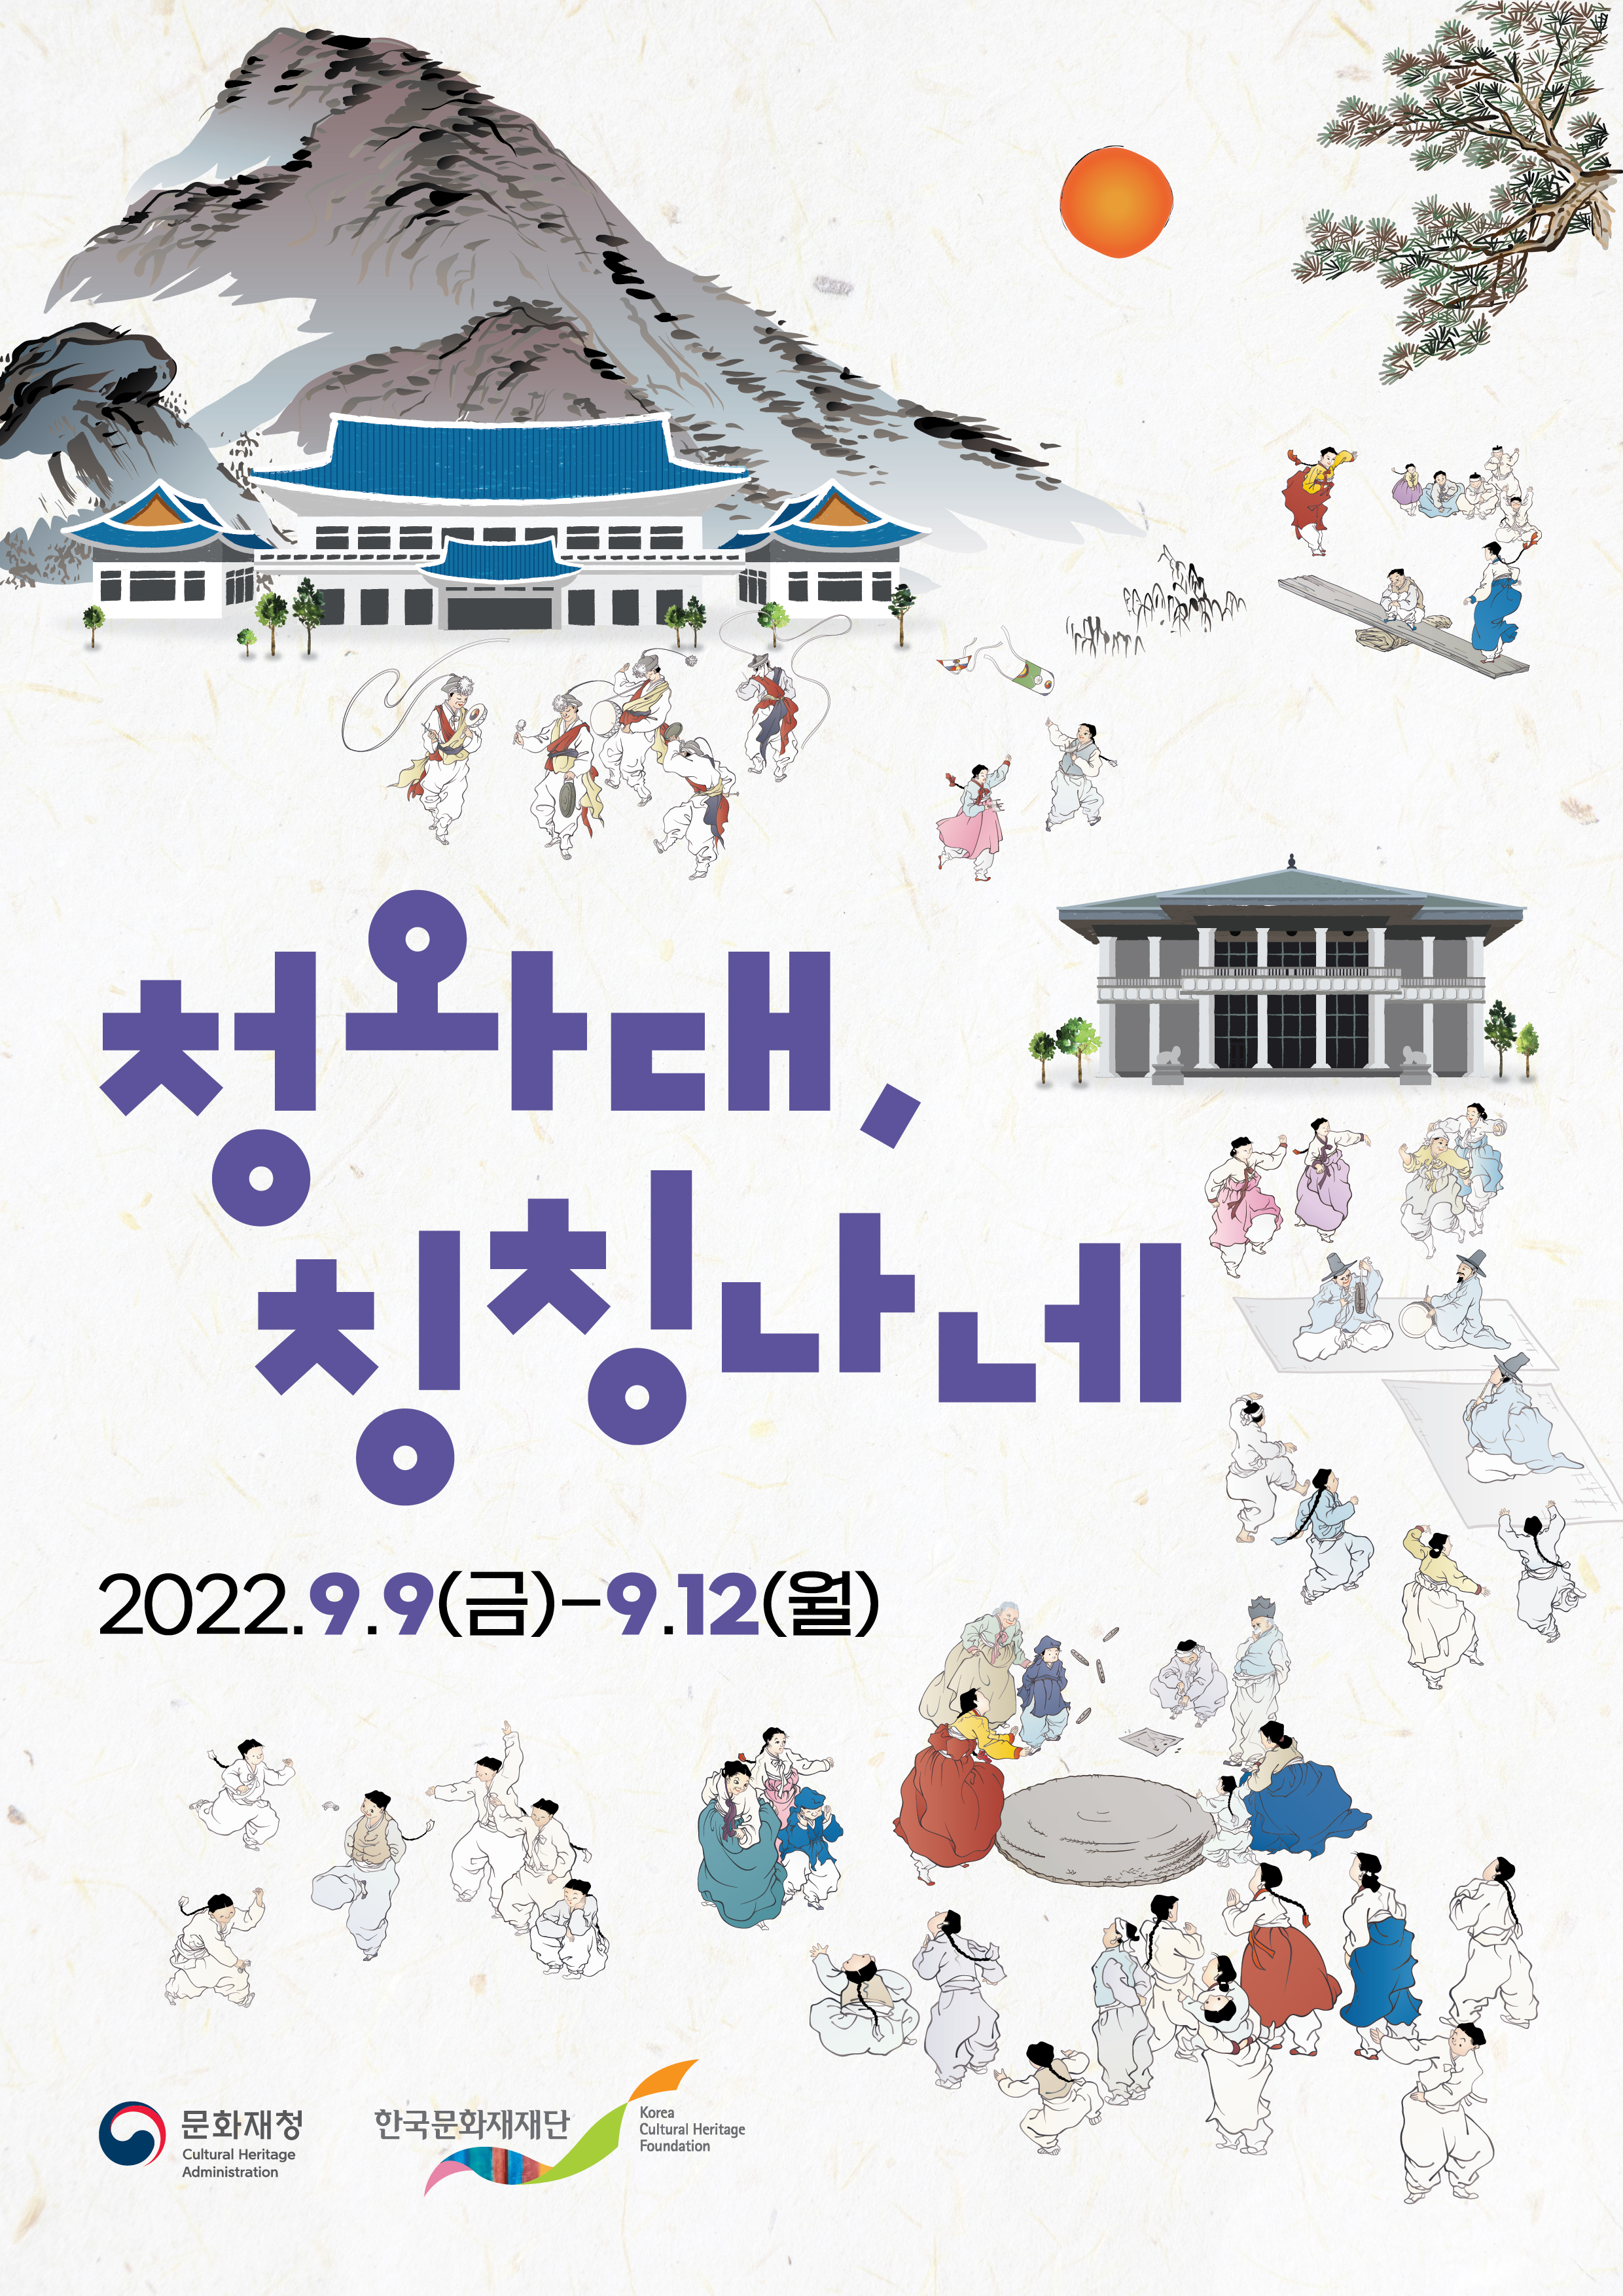 Cheong Wa Dae celebrates Chuseok special event